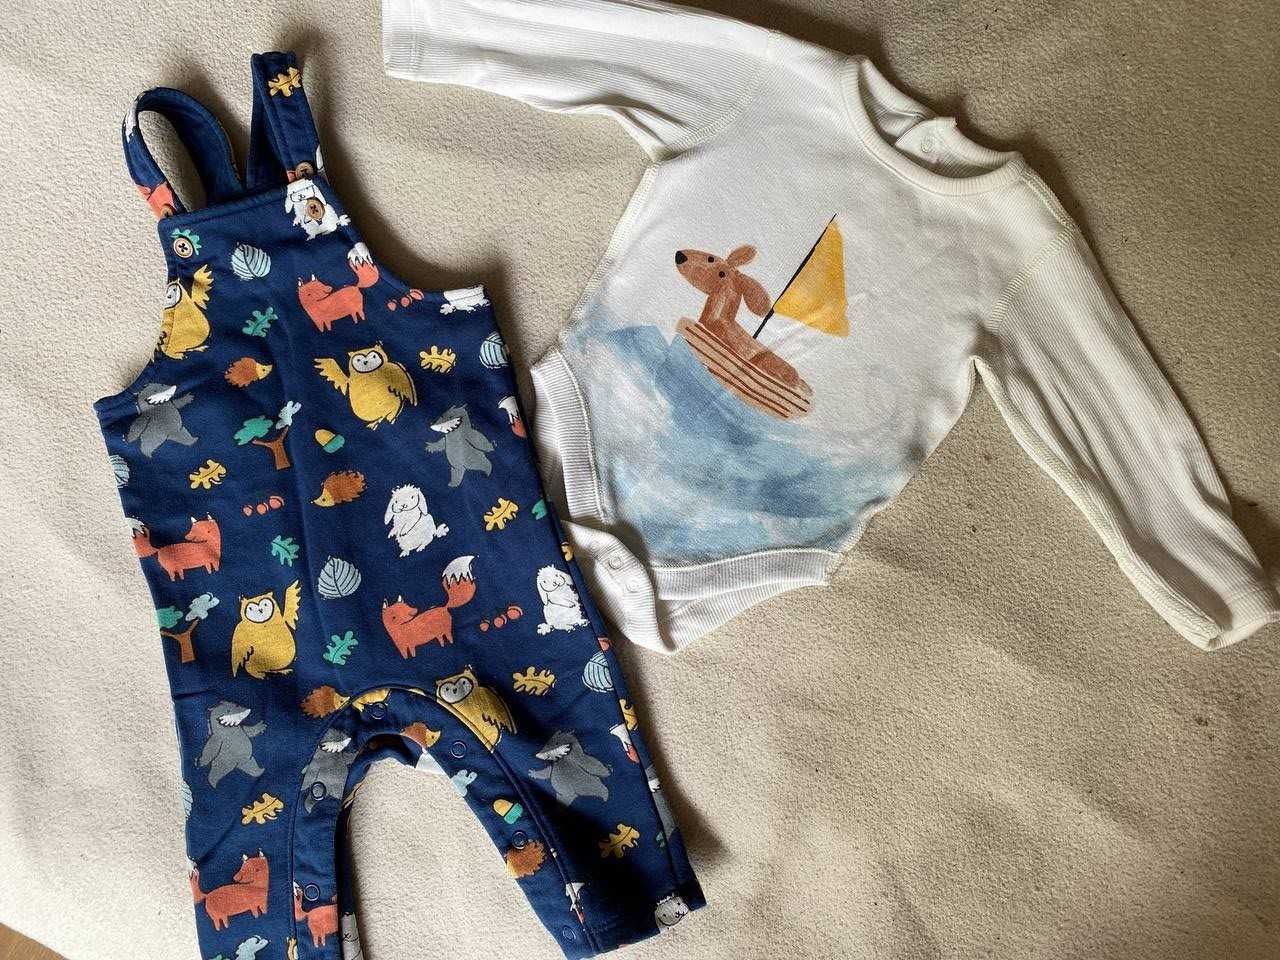 Пакет одежды на мальчика 3-6 месяцев